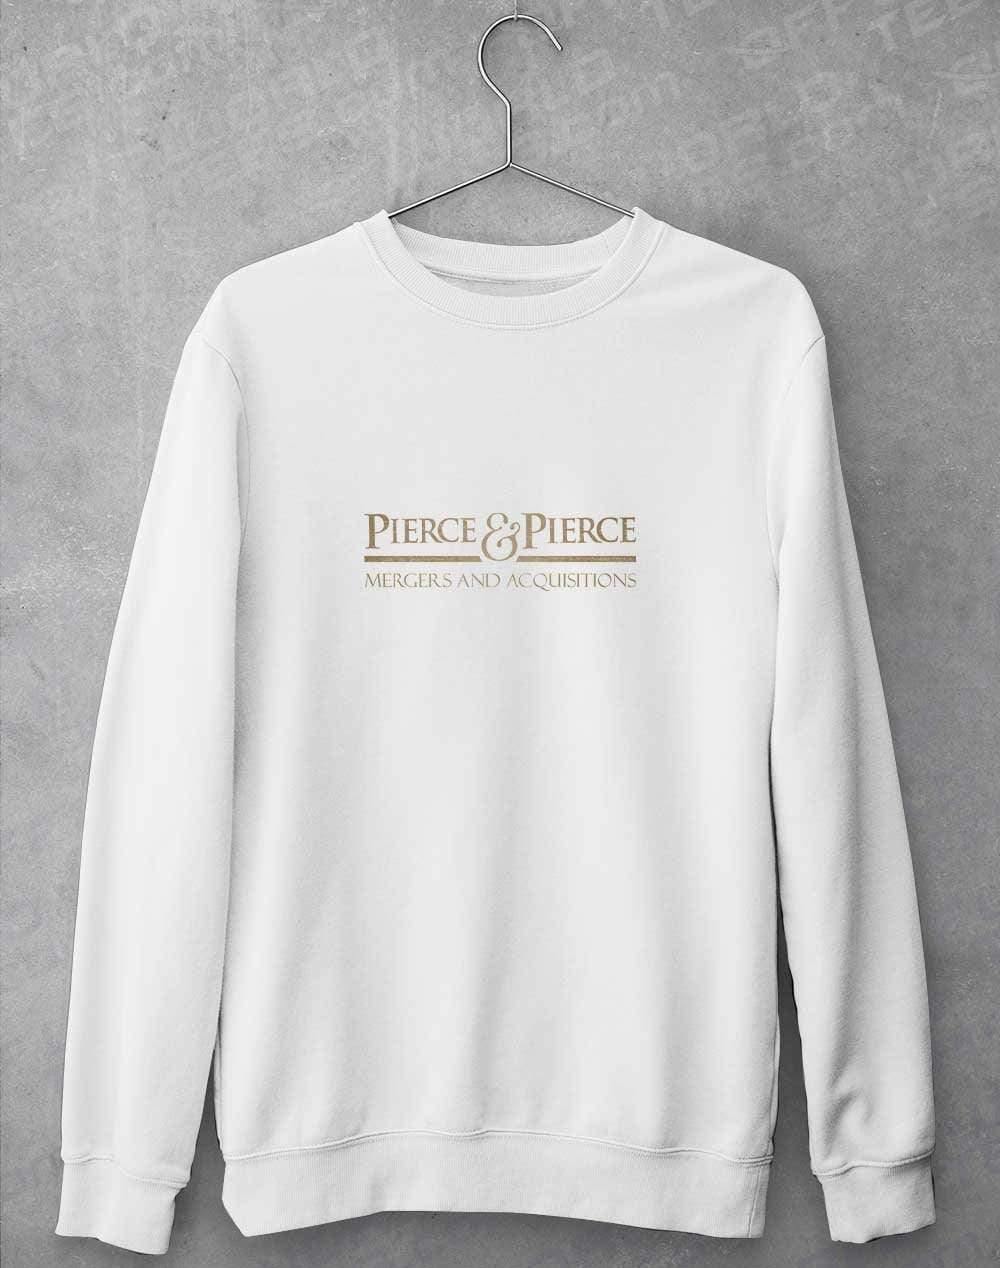 Pierce and Pierce Sweatshirt S / Arctic White  - Off World Tees